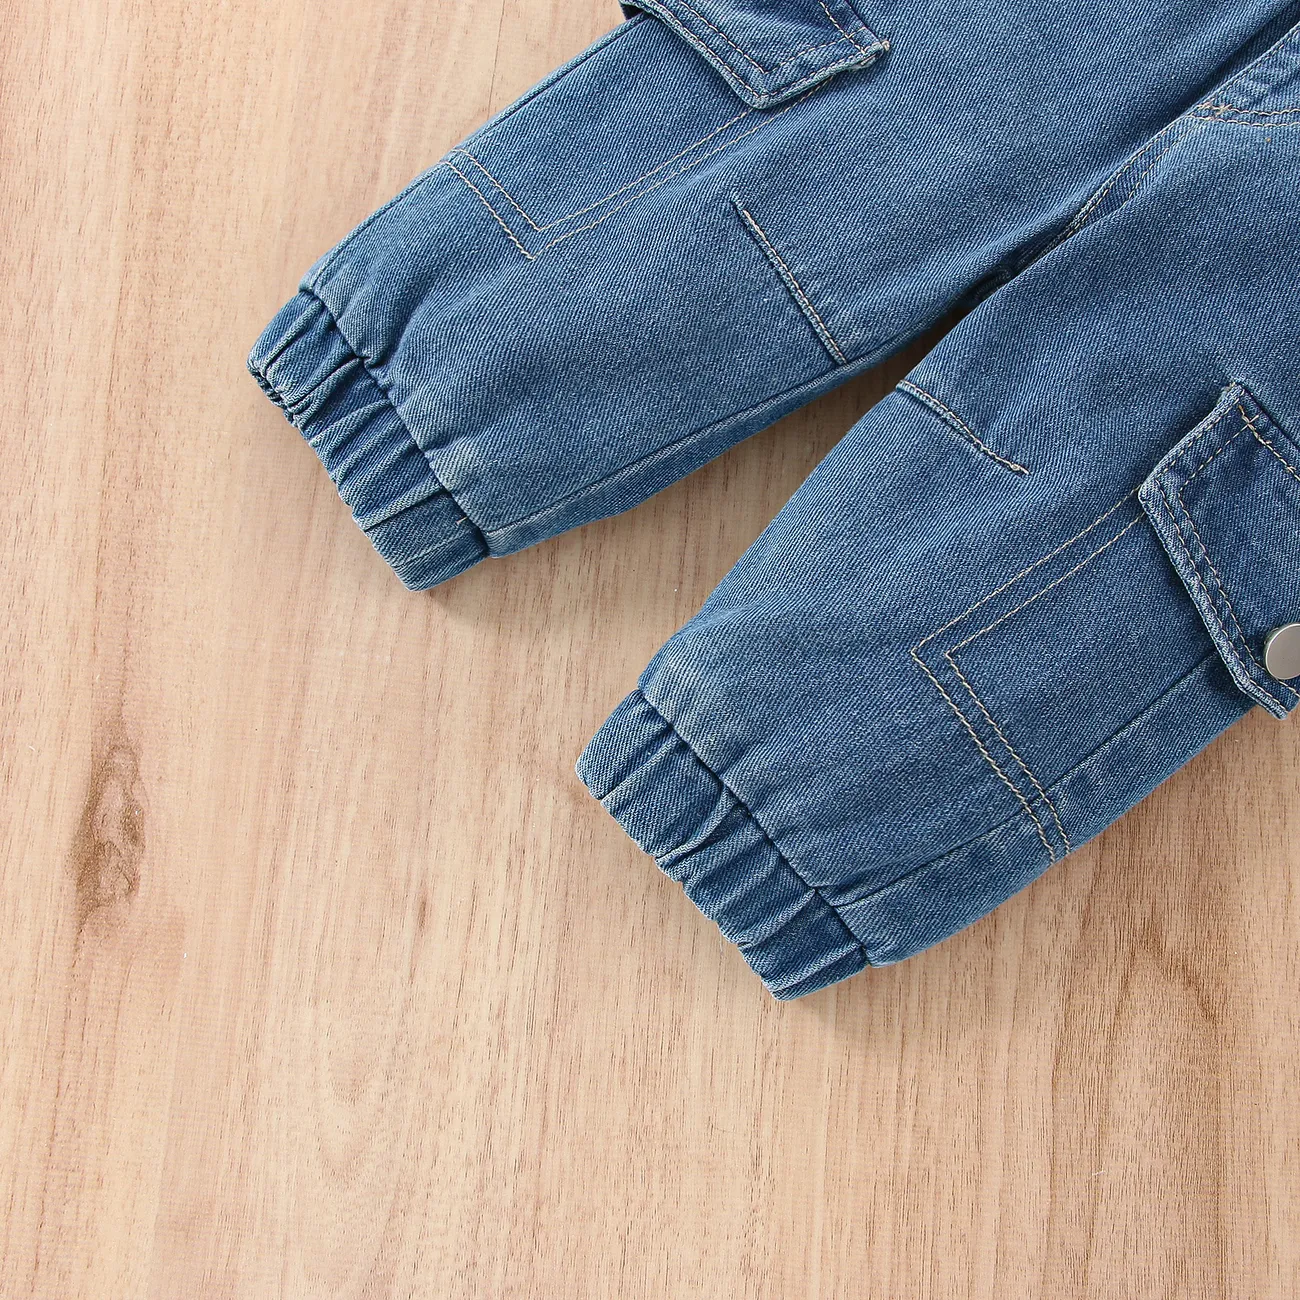 Baby/Kid Girl/Boy Childlike Einfarbiger Mantel/Jeans/Pullover/Schuhe blau big image 1